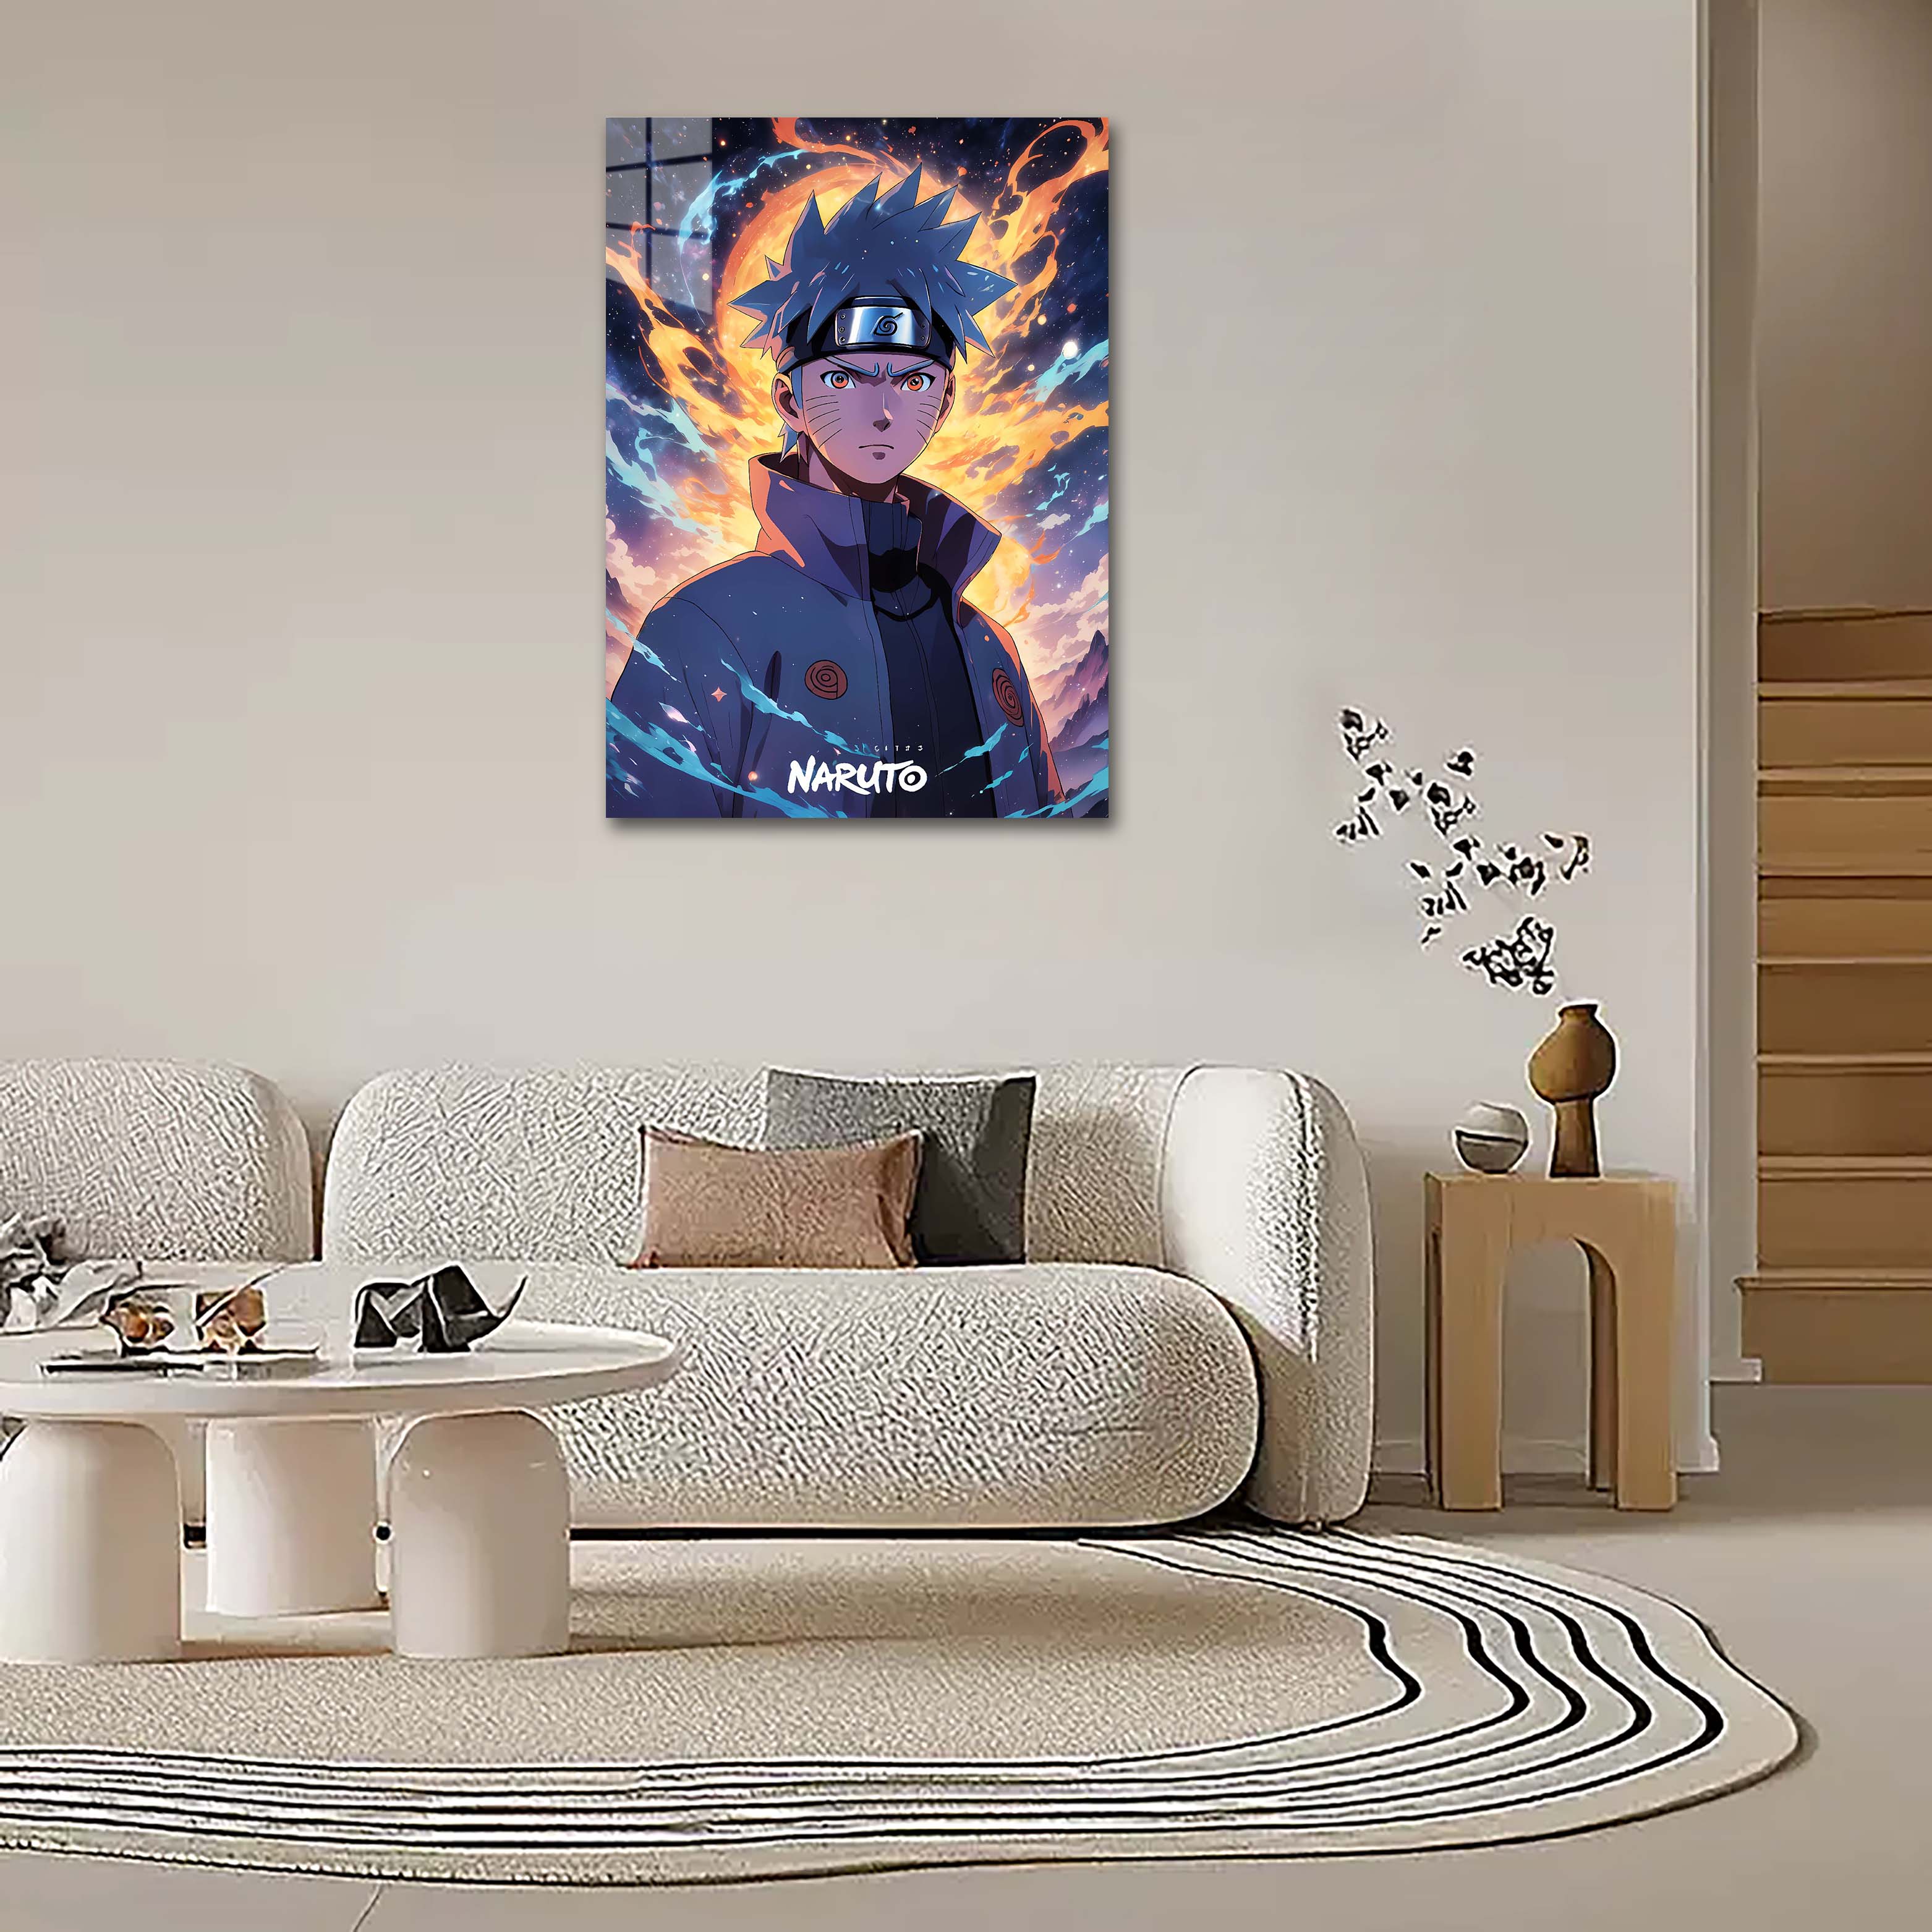 Uzumaki Naruto-designed by @Serafin Eastwood